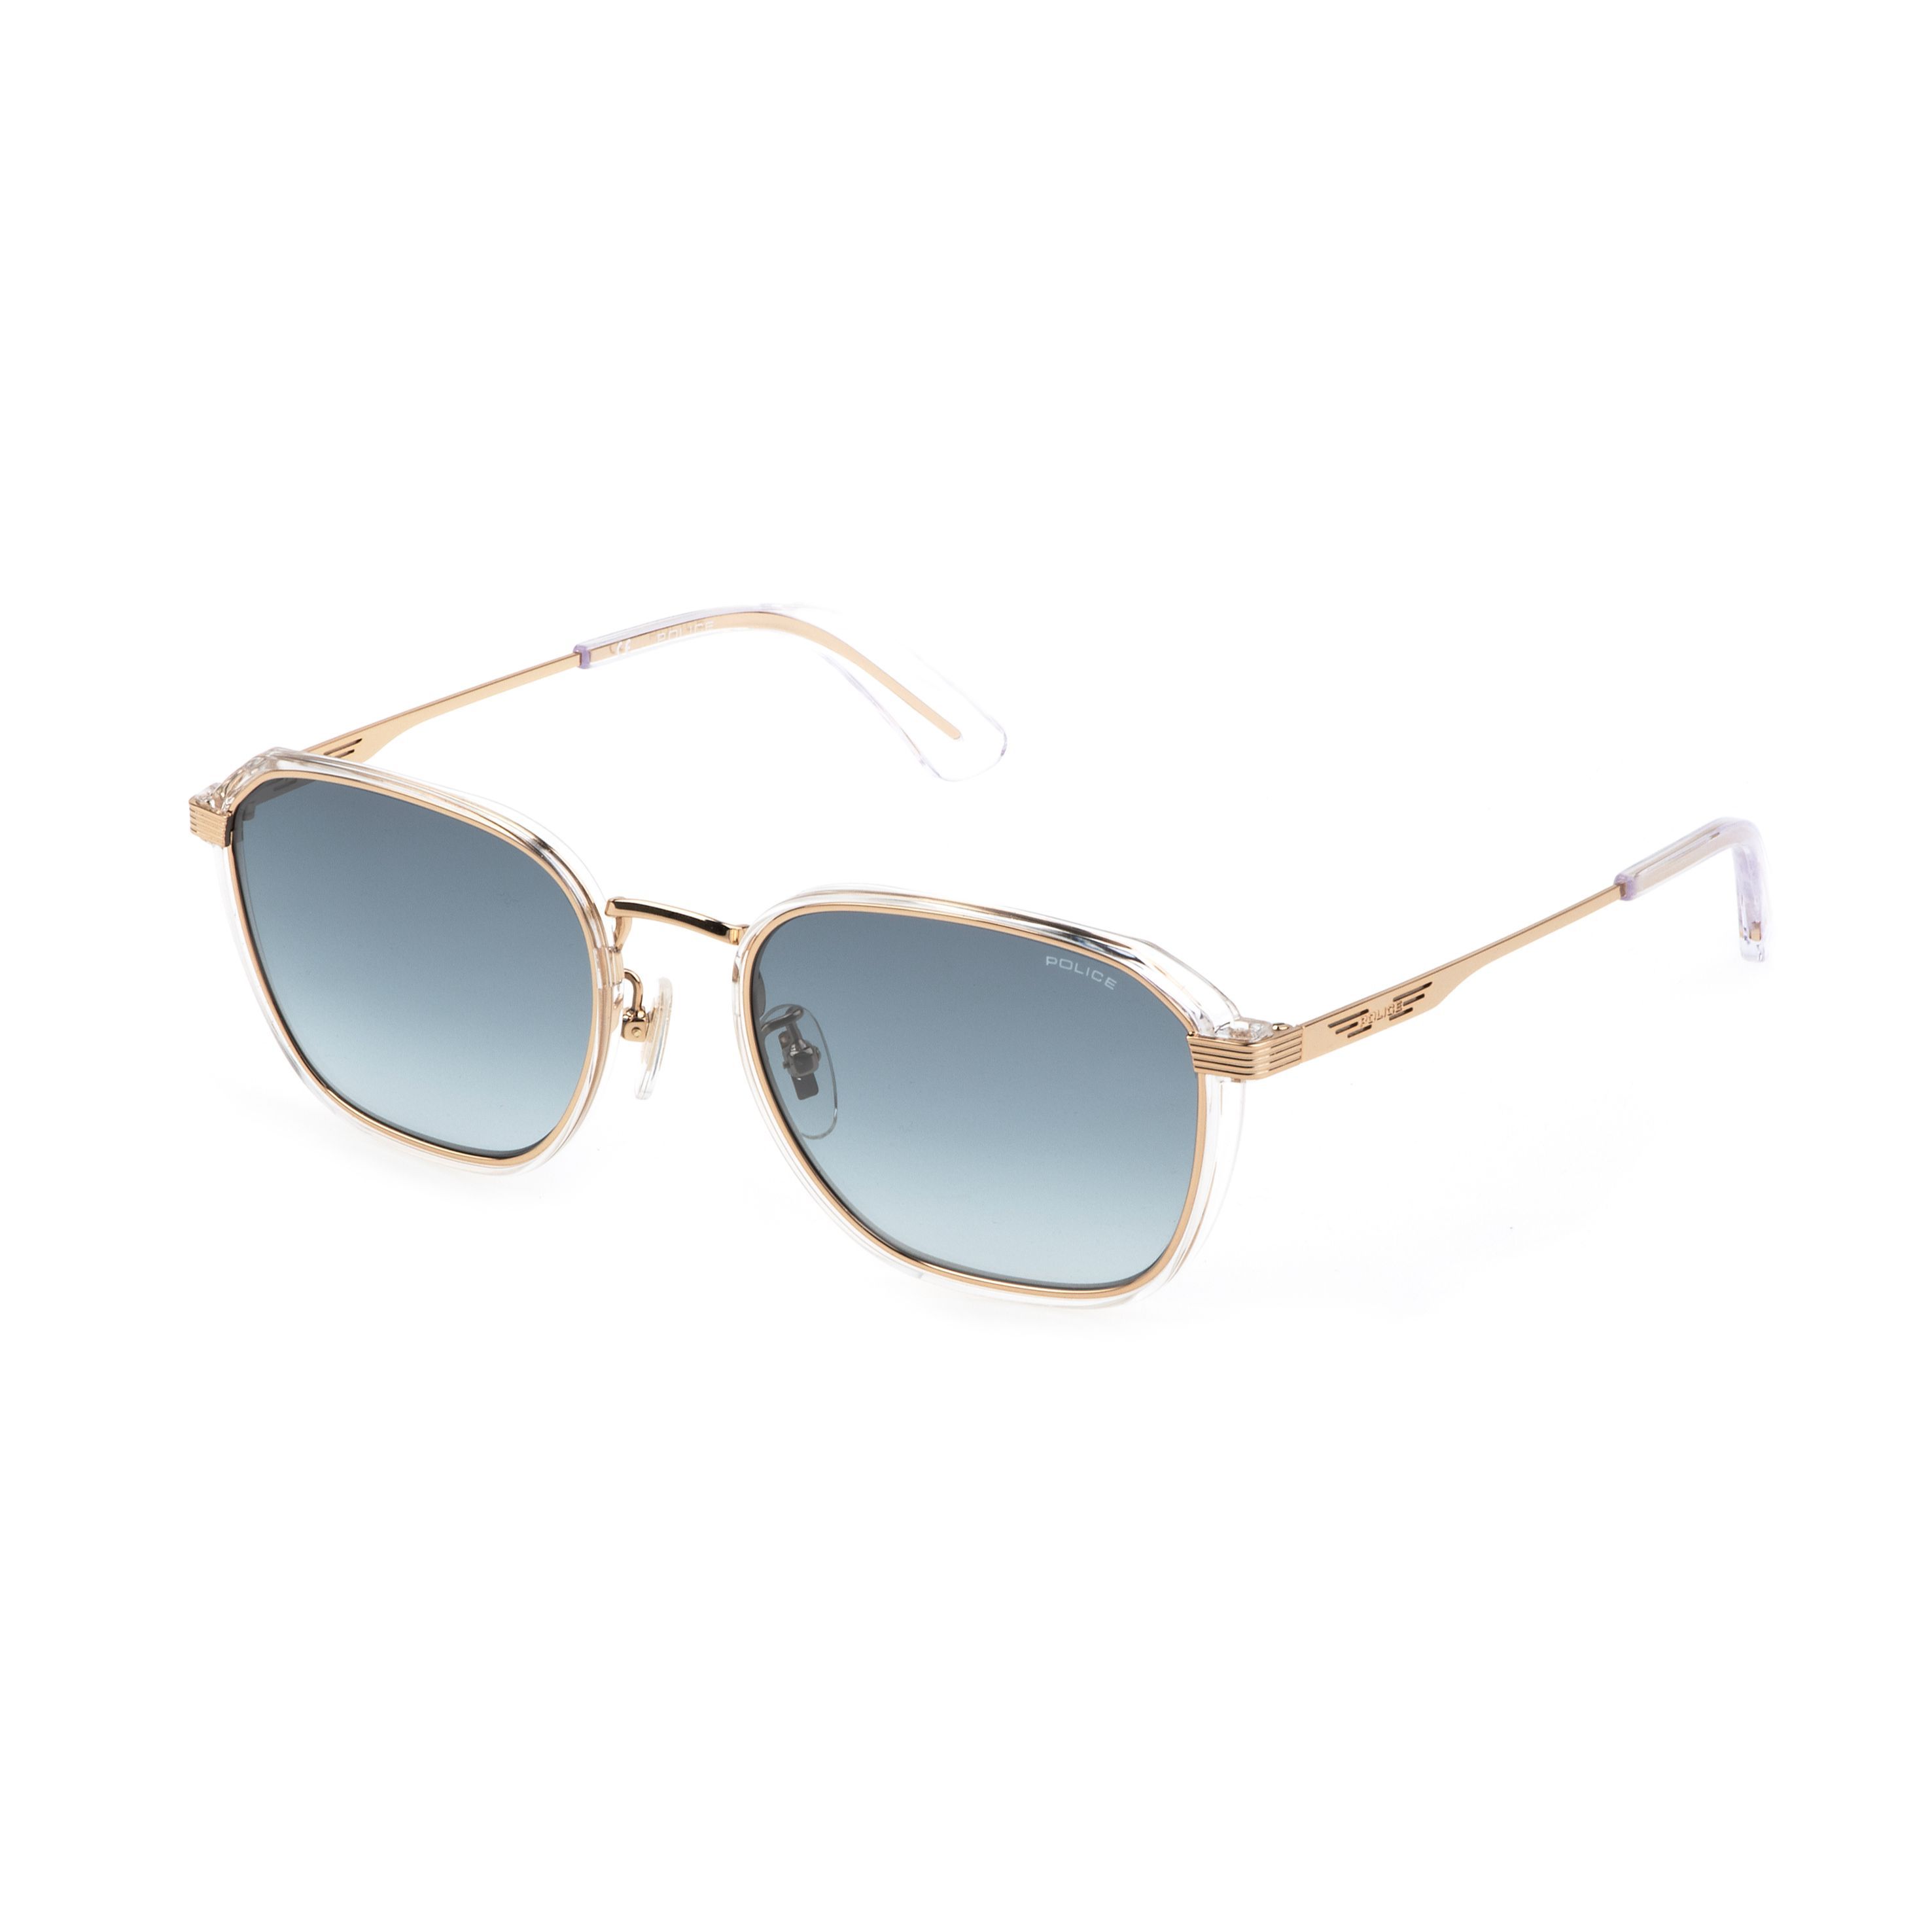 SPLD46M Panthos Sunglasses 300 - size 53